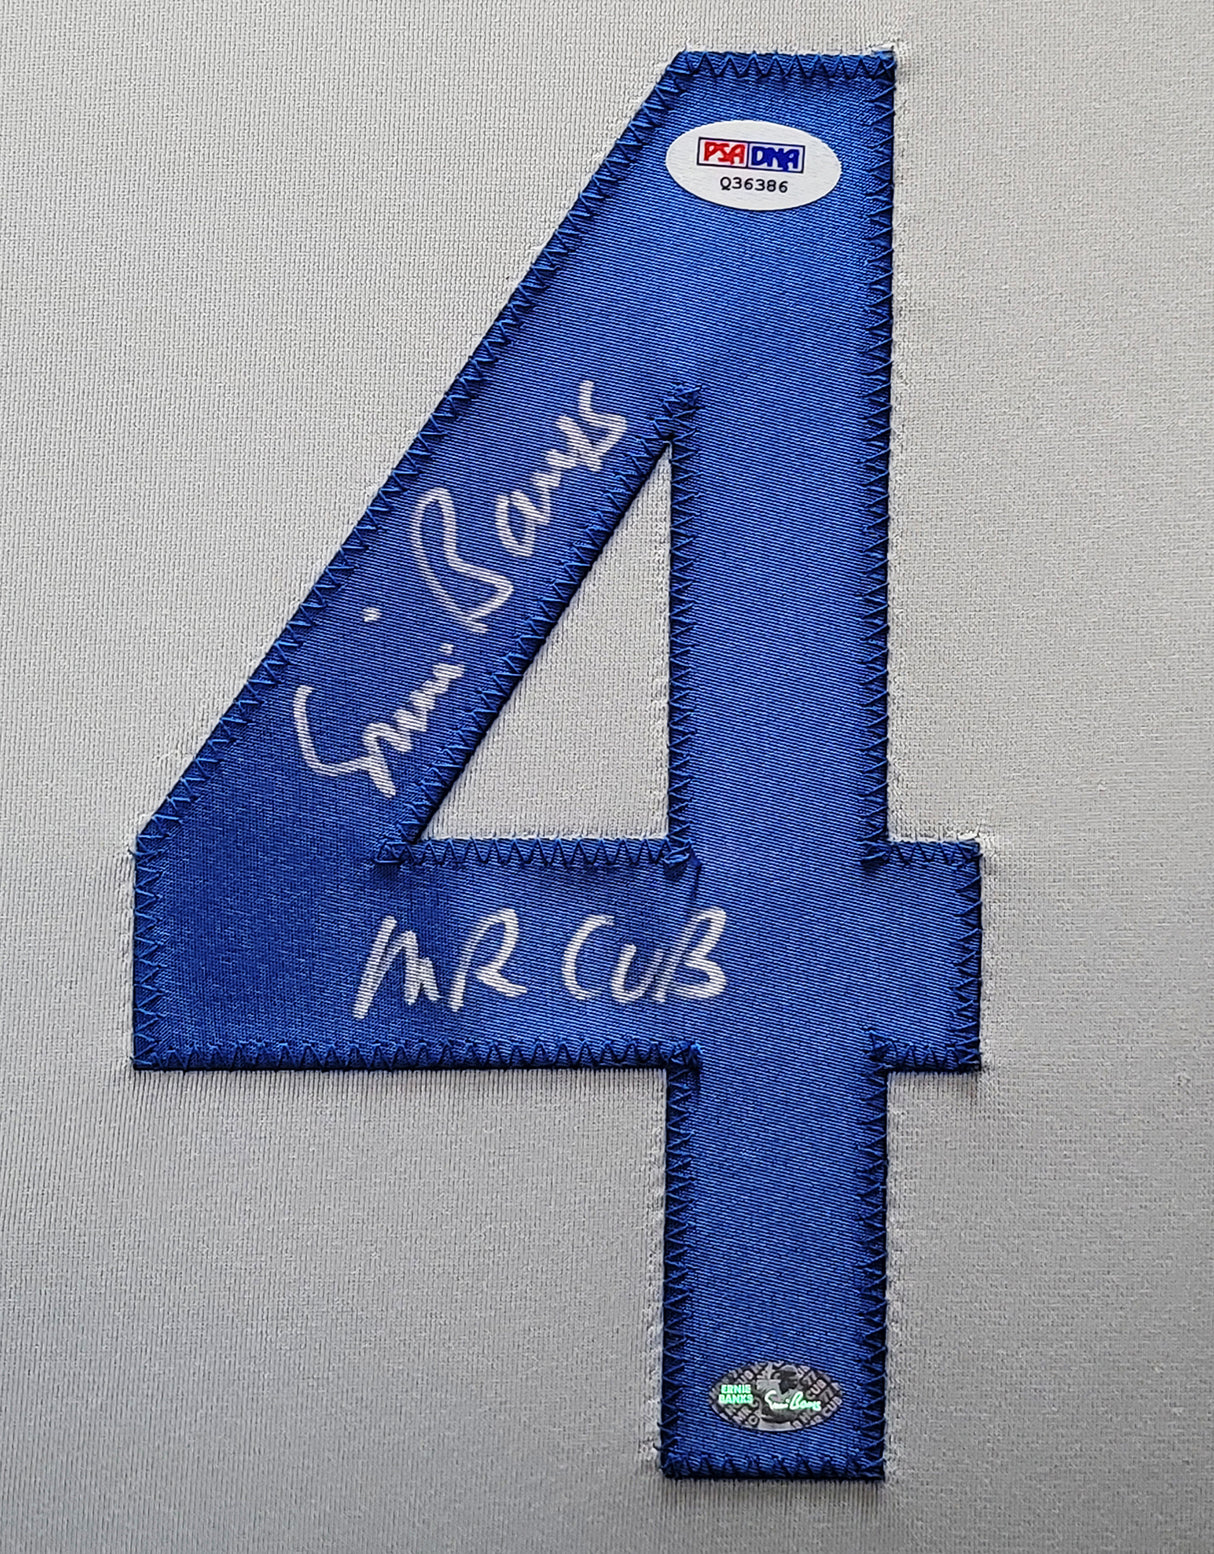 Chicago Cubs Ernie Banks Autographed Framed Gray Jersey "Mr. Cub" PSA/DNA Stock #202409